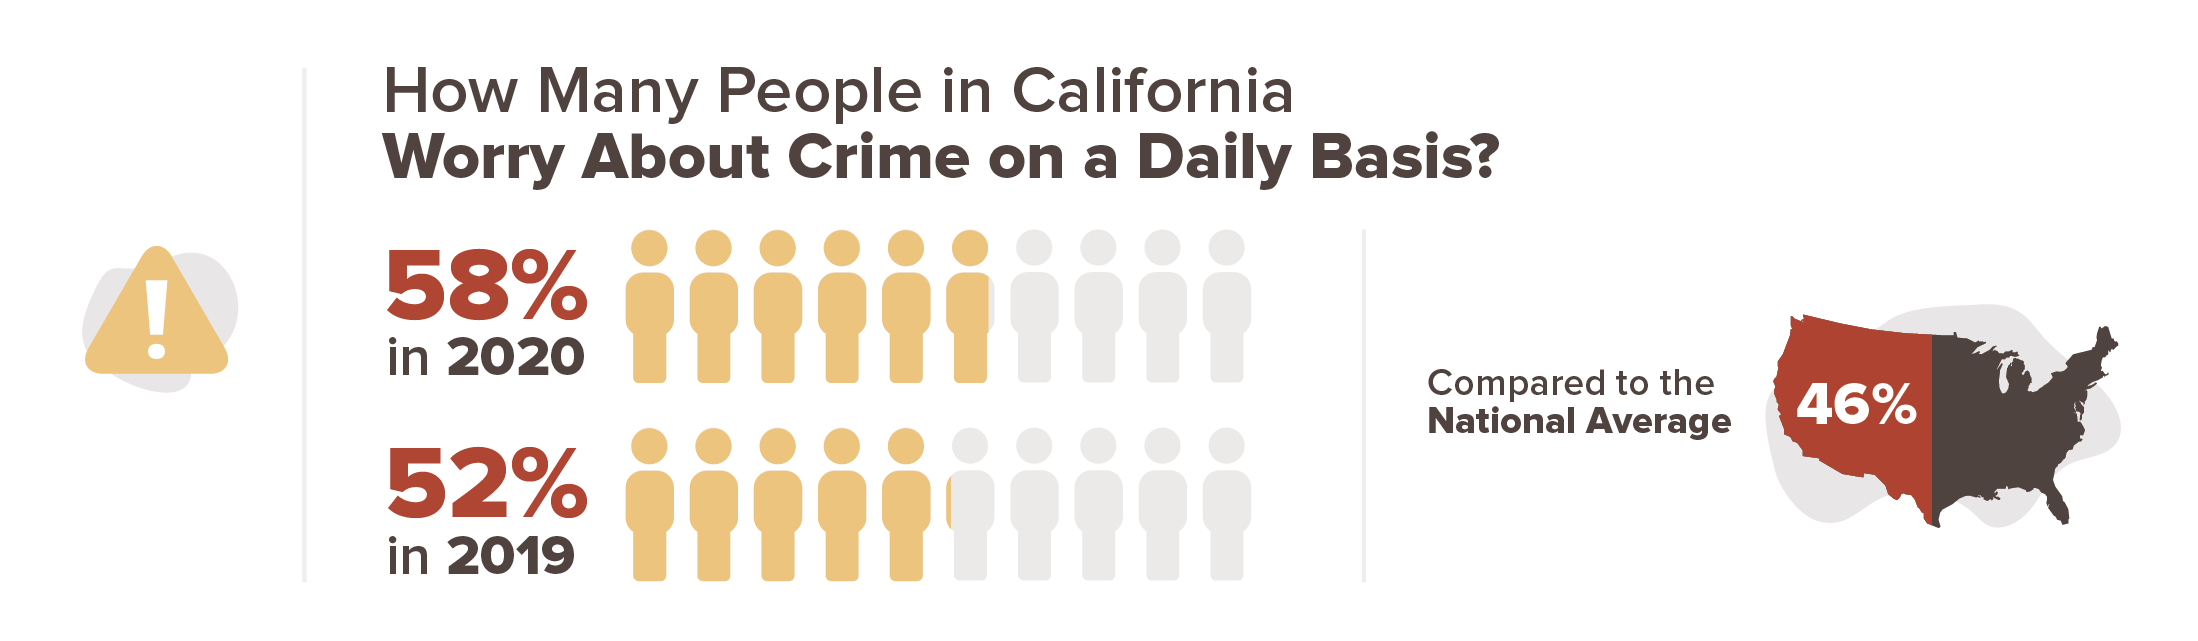 California crime stats infographic